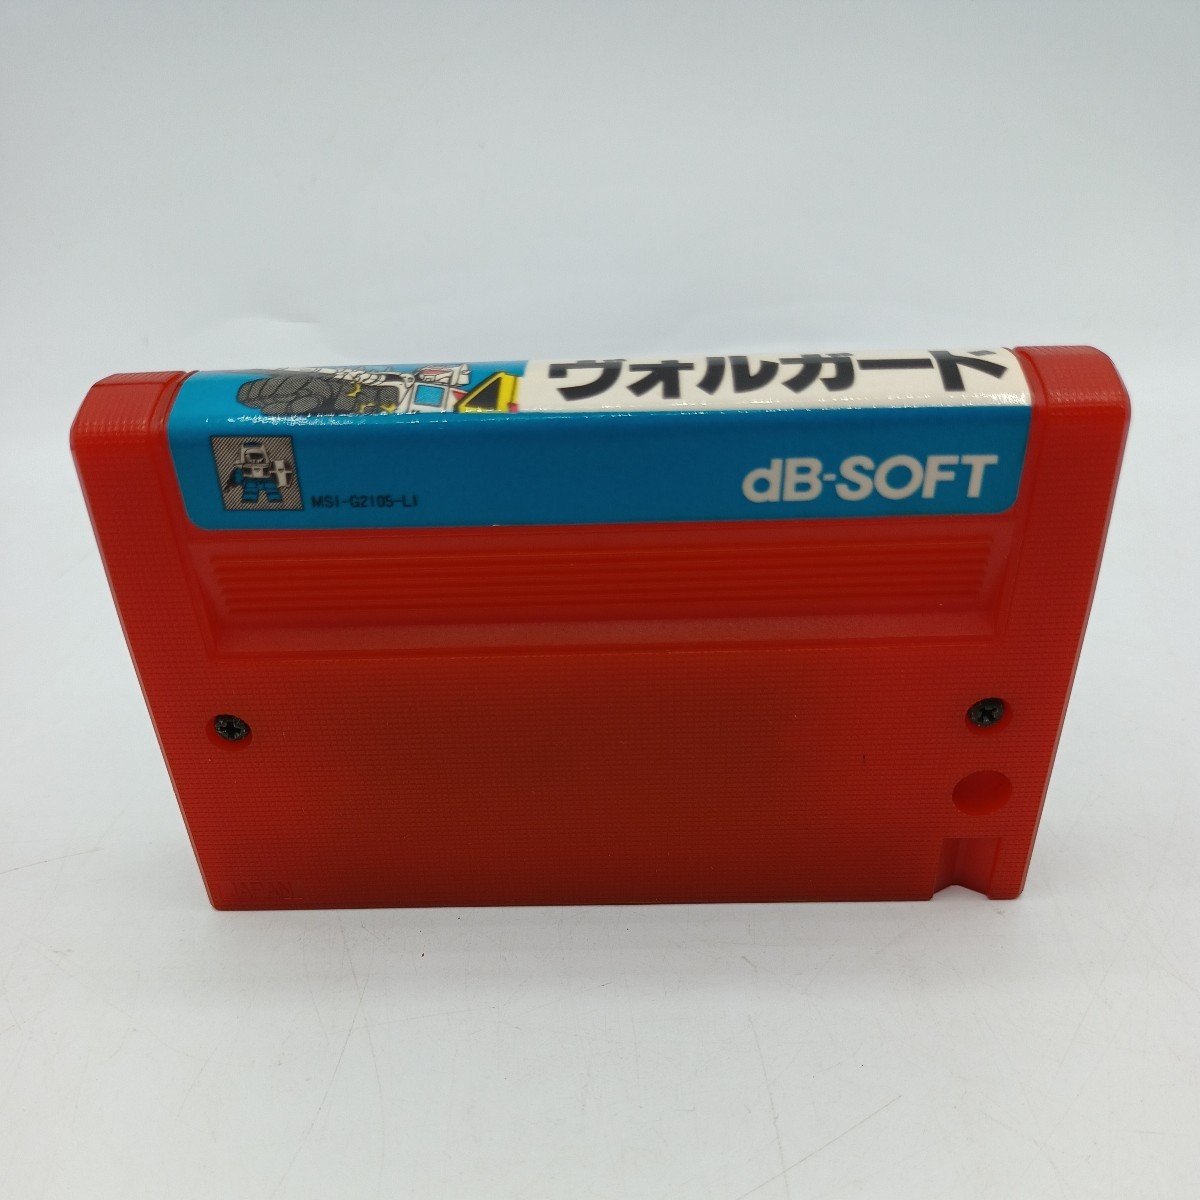 I2105 ☆激レア MSX ゲームカセット「ヴォルガード」 VOLGUARD ソフト